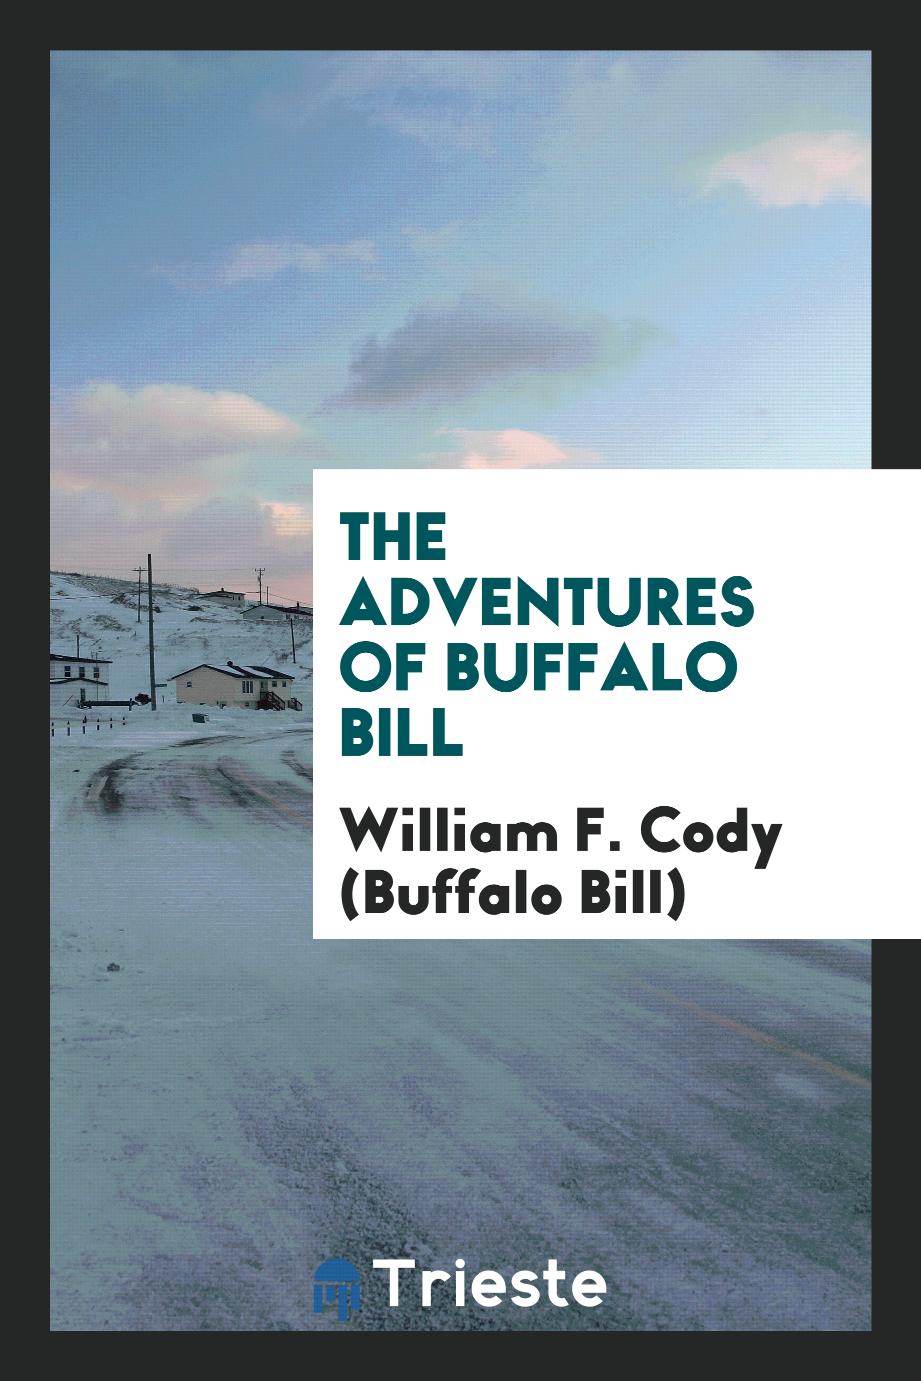 The adventures of Buffalo Bill